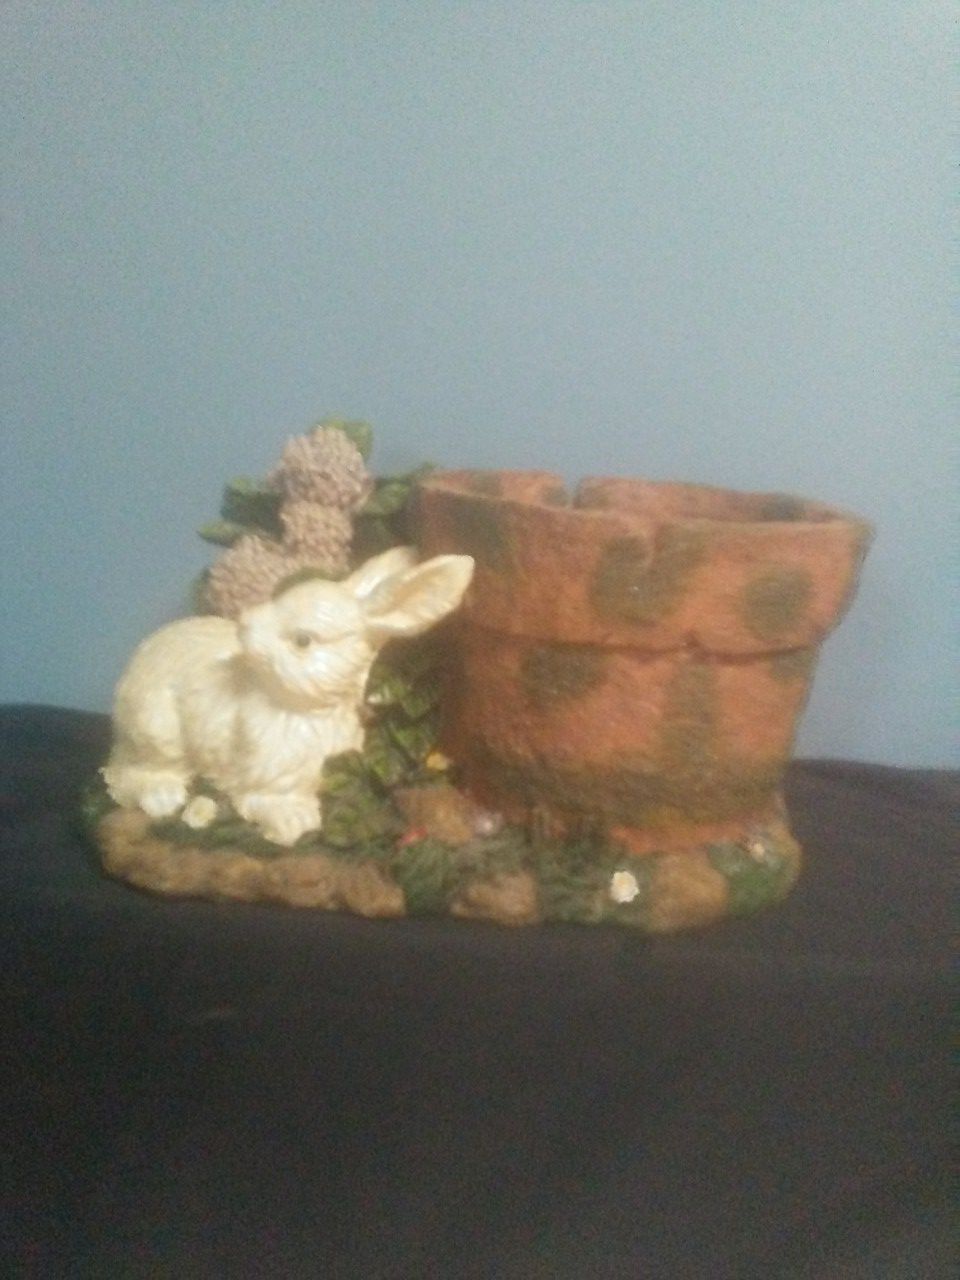 Rabbit flower pot